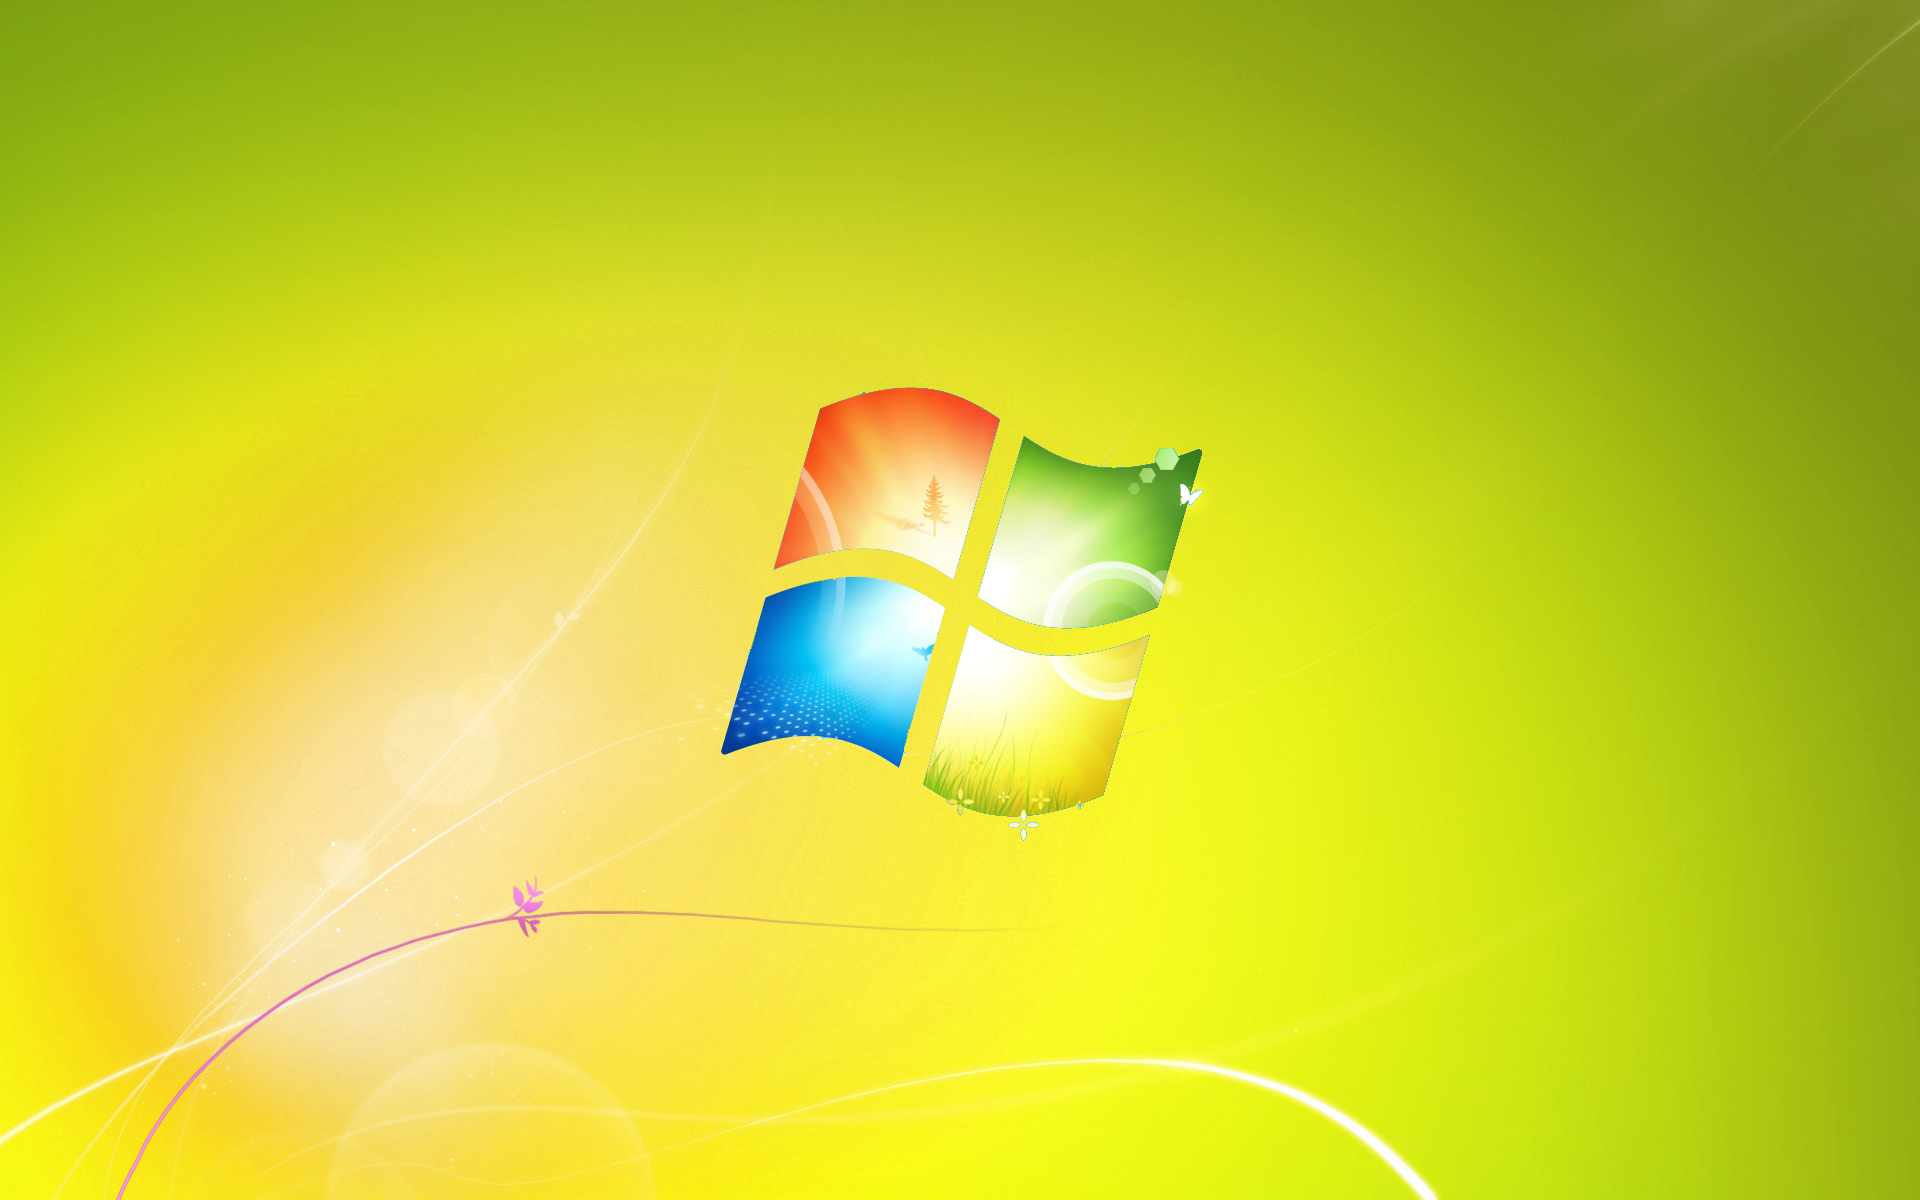 Windows 7 Default Wallpaper Yellow Version by dominichulme on DeviantArt